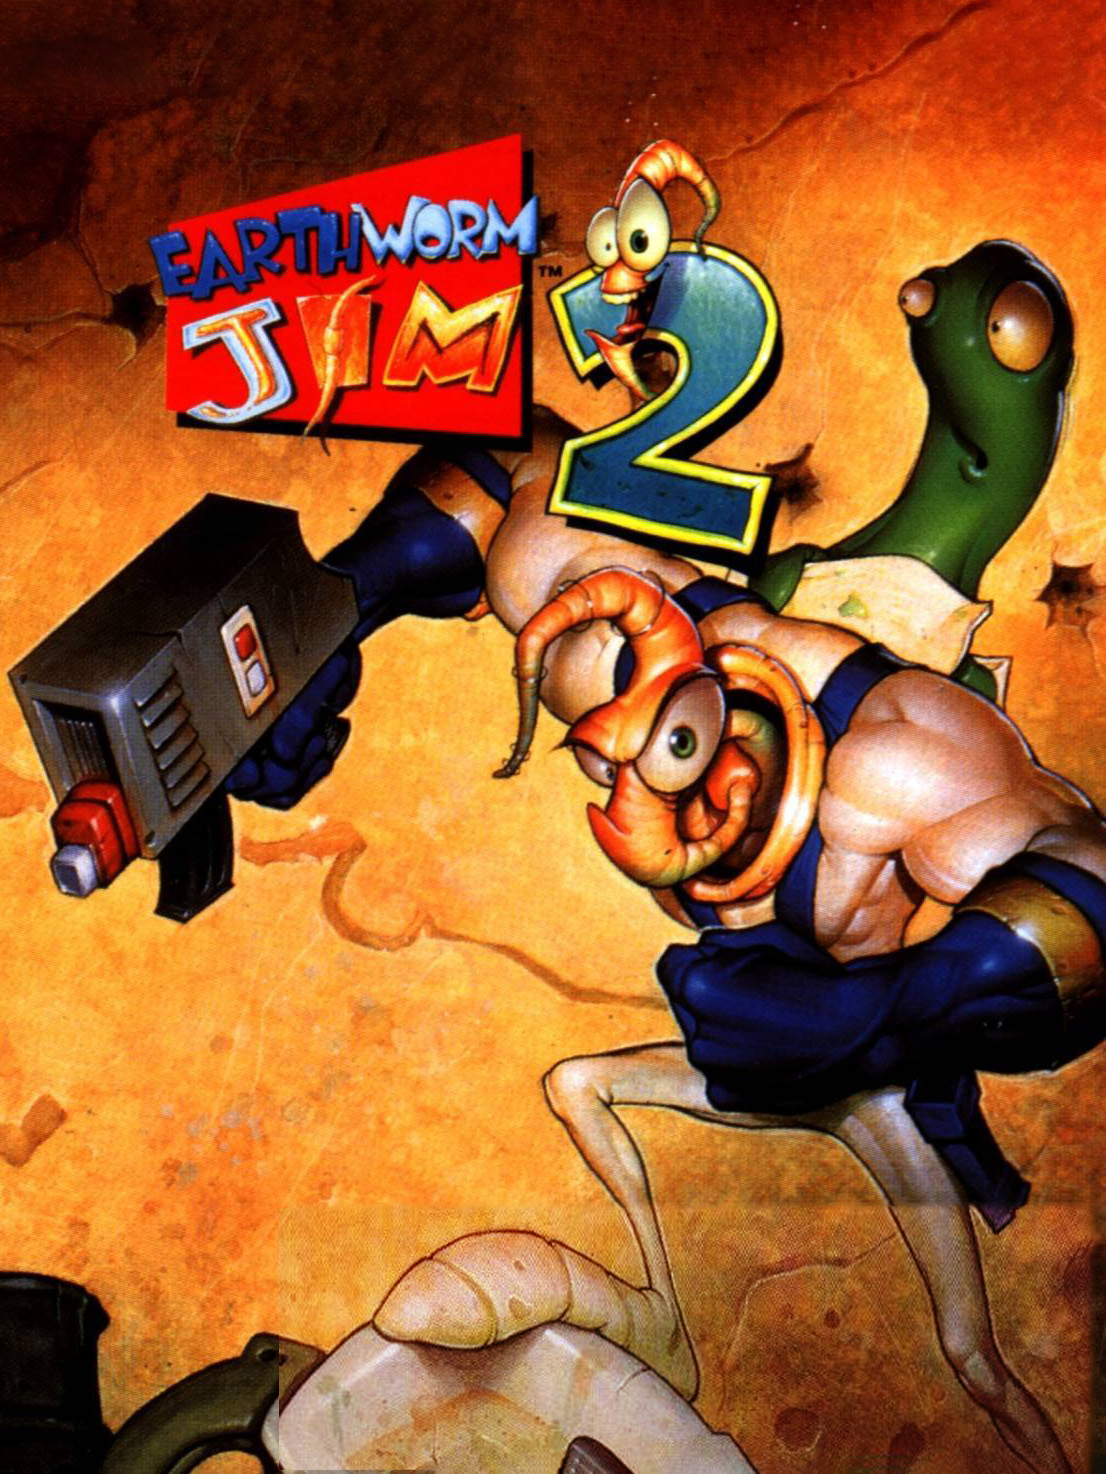 Earthworm Jim (Mega Drive) - TecToy